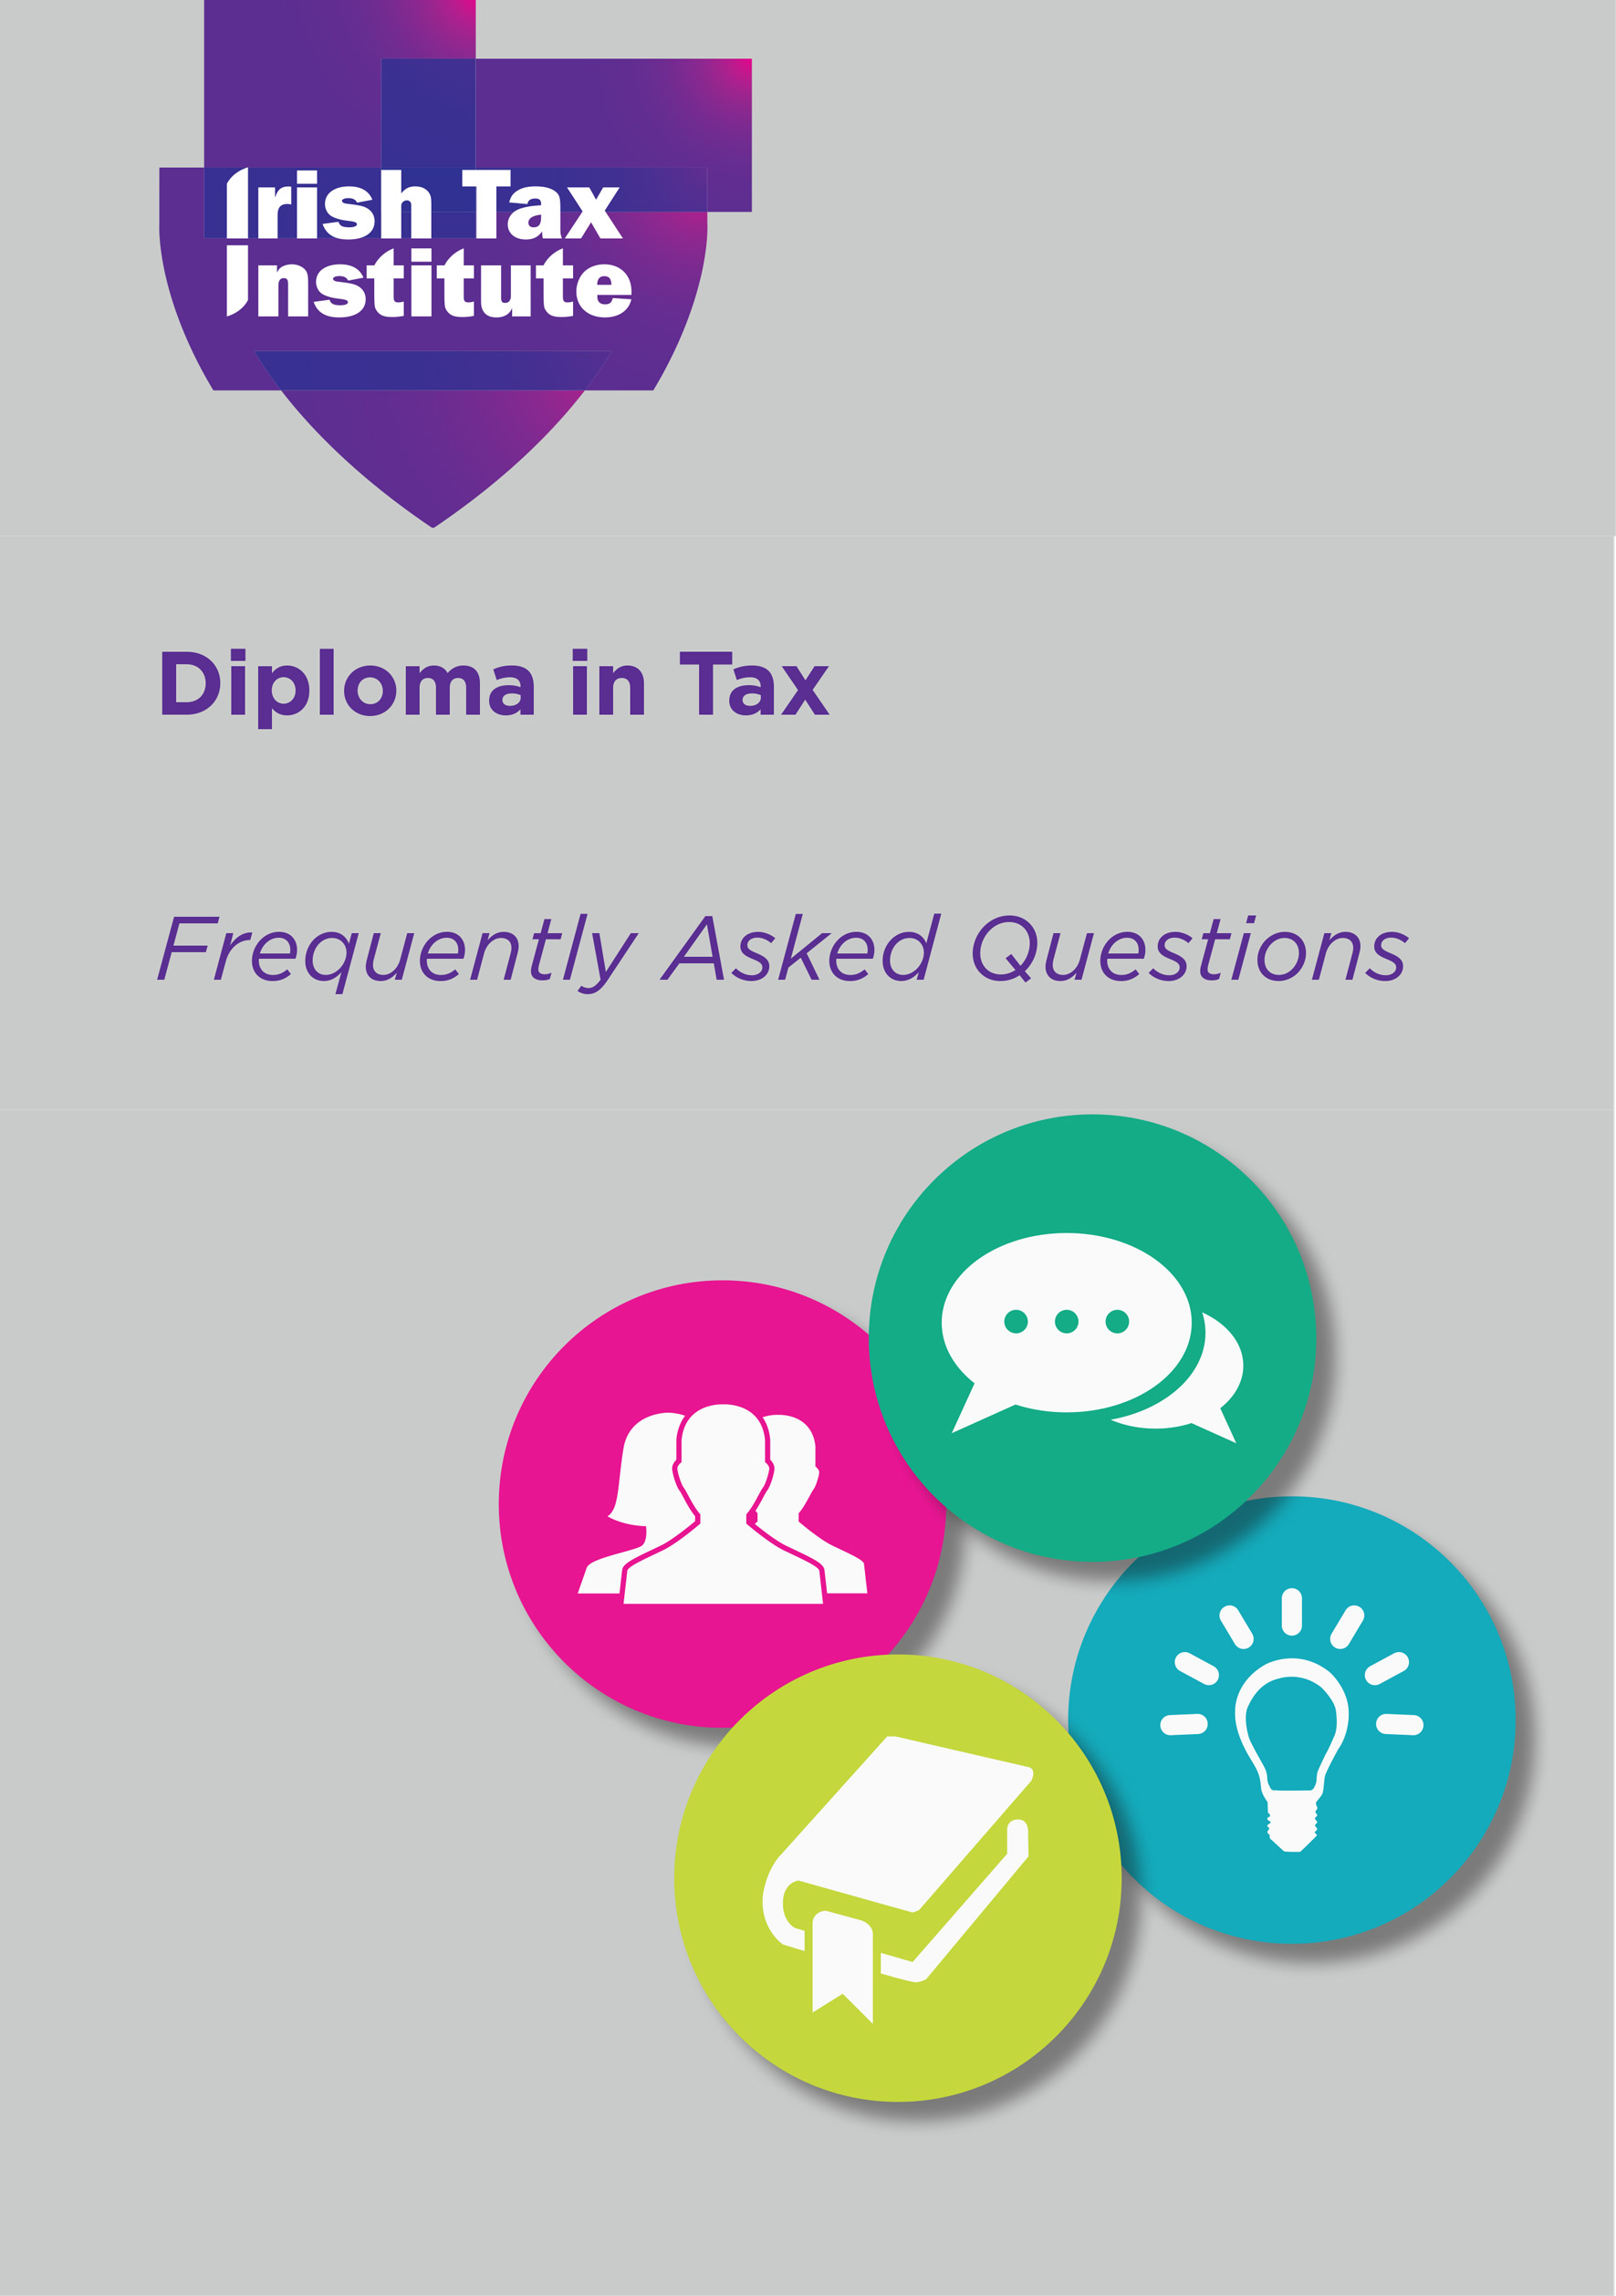 Factsheet on Diploma in Tax